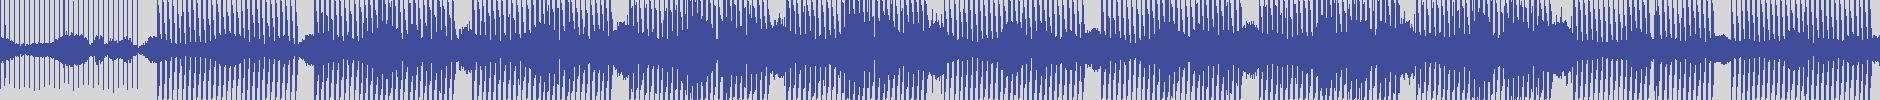 nf_boyz_records [NFY023] Scott Shelby - A Crime [Heavy Mix] audio wave form